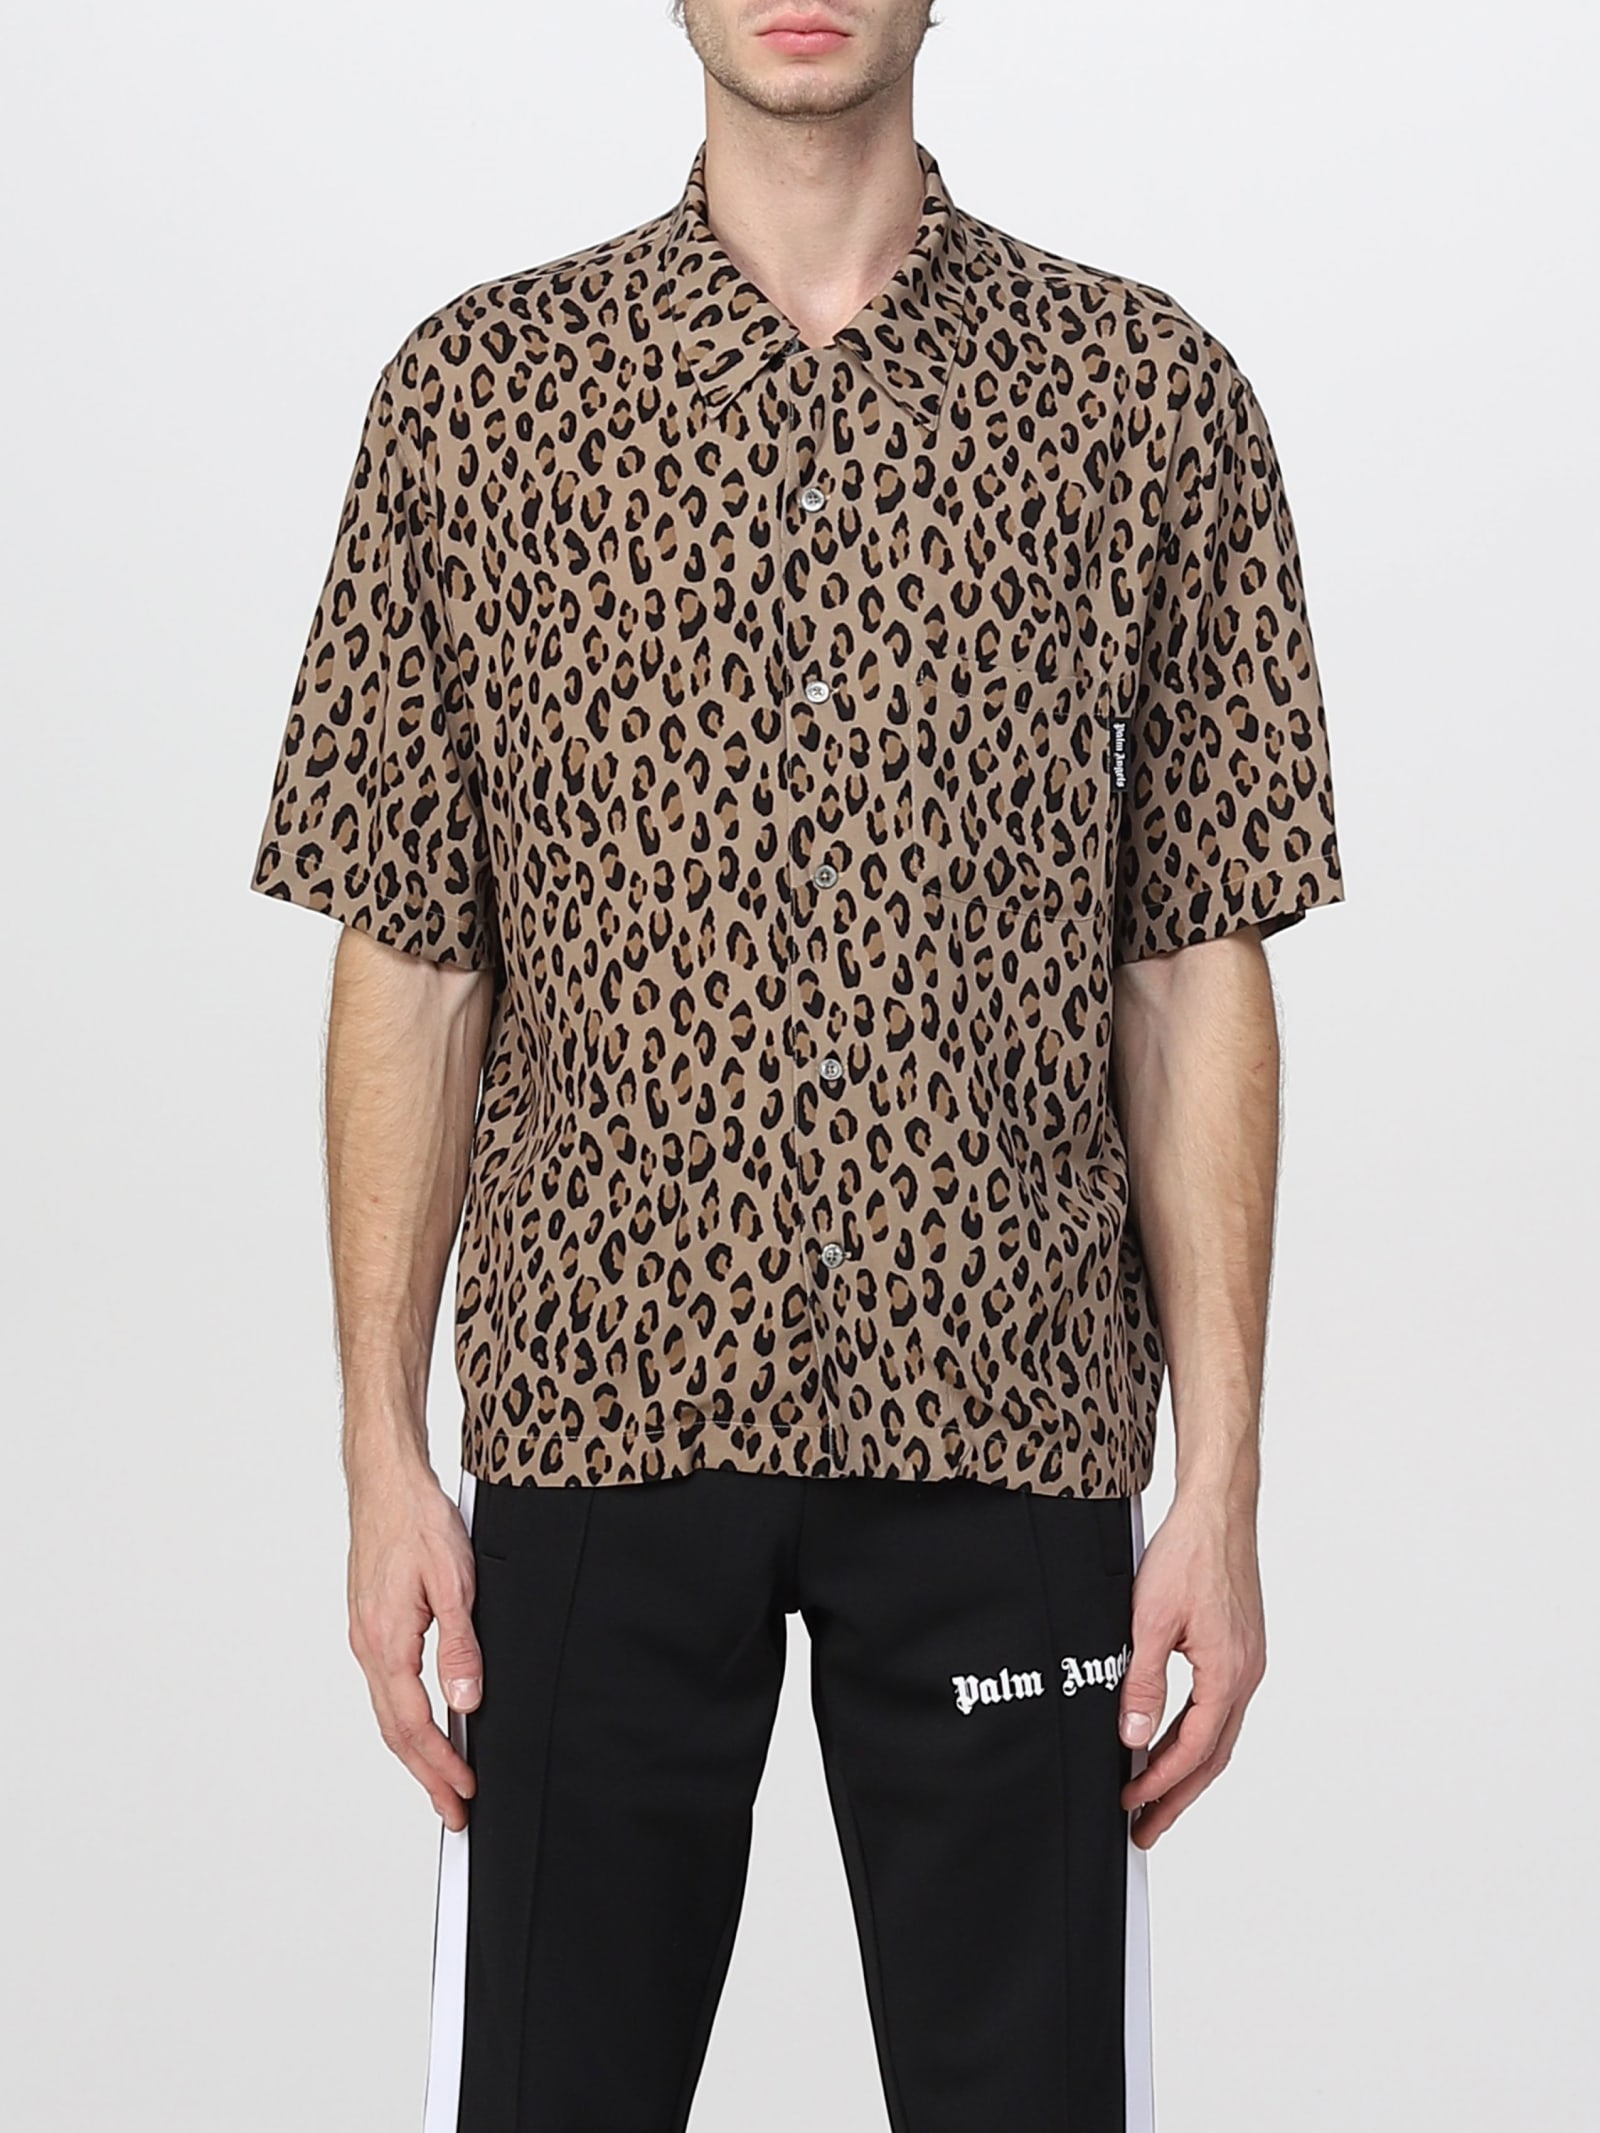 Palm Angels Leopard Bowling Shirt